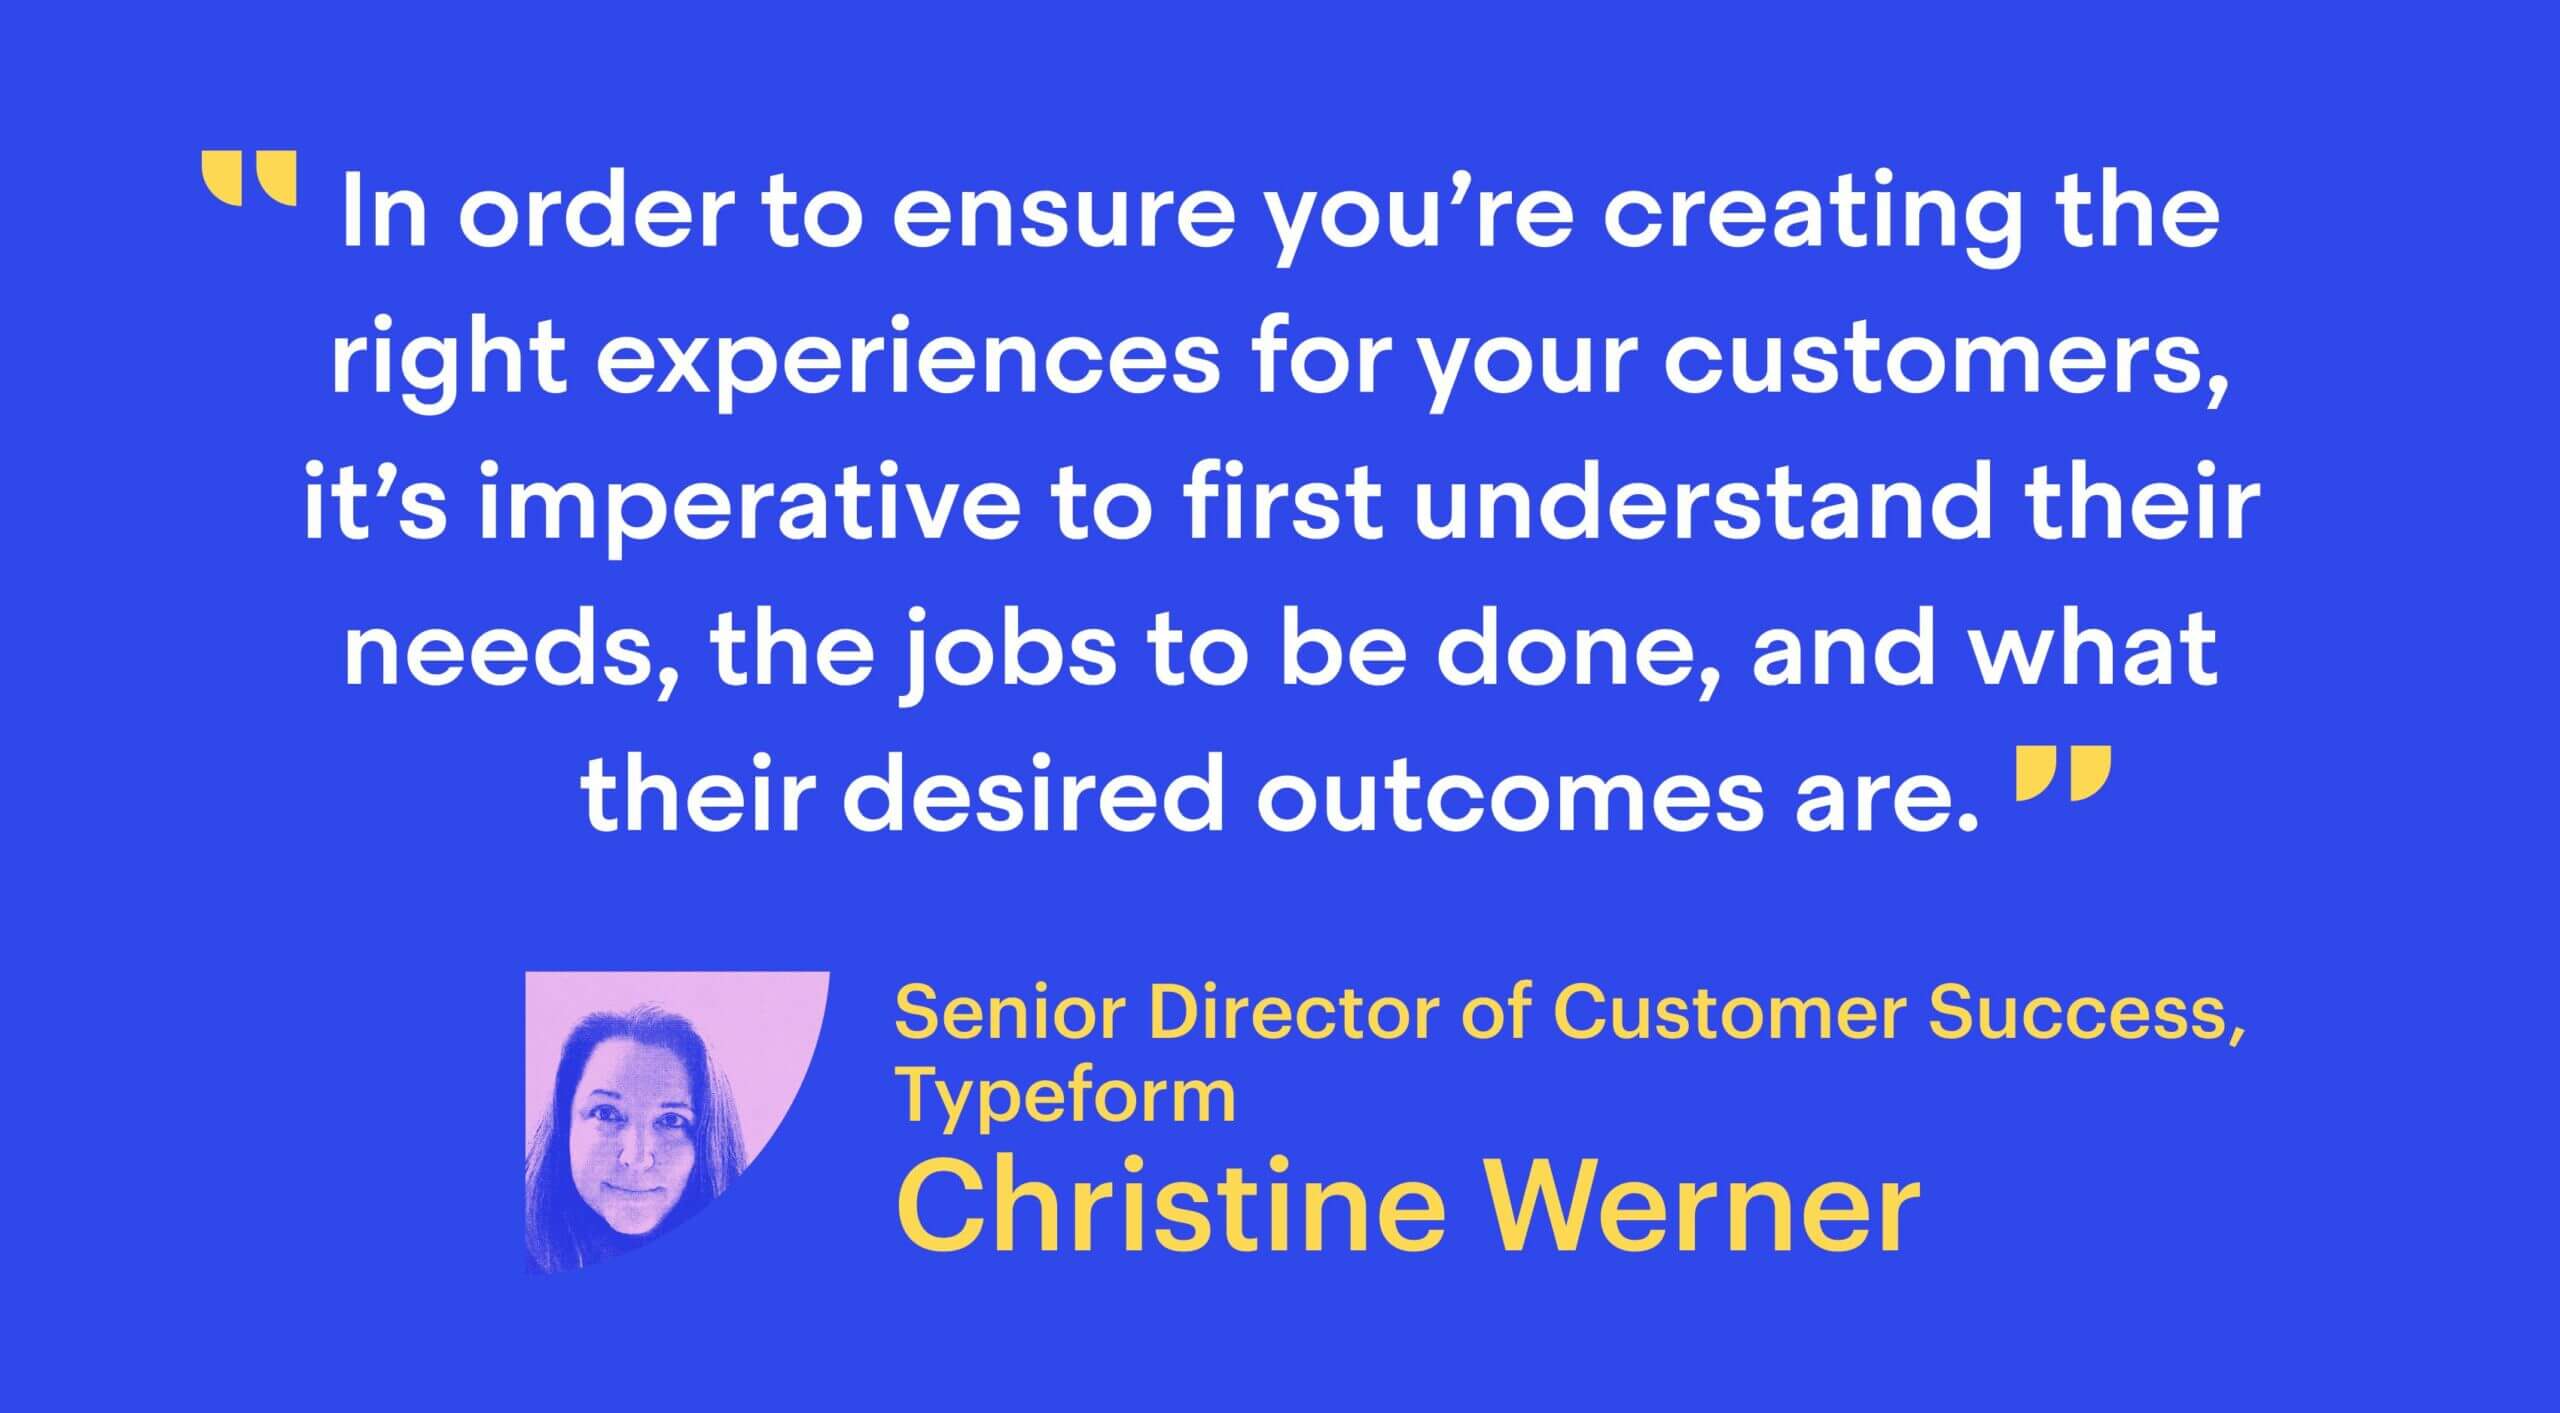 Christine Werner, Senior Director of Customer Success at Typeform